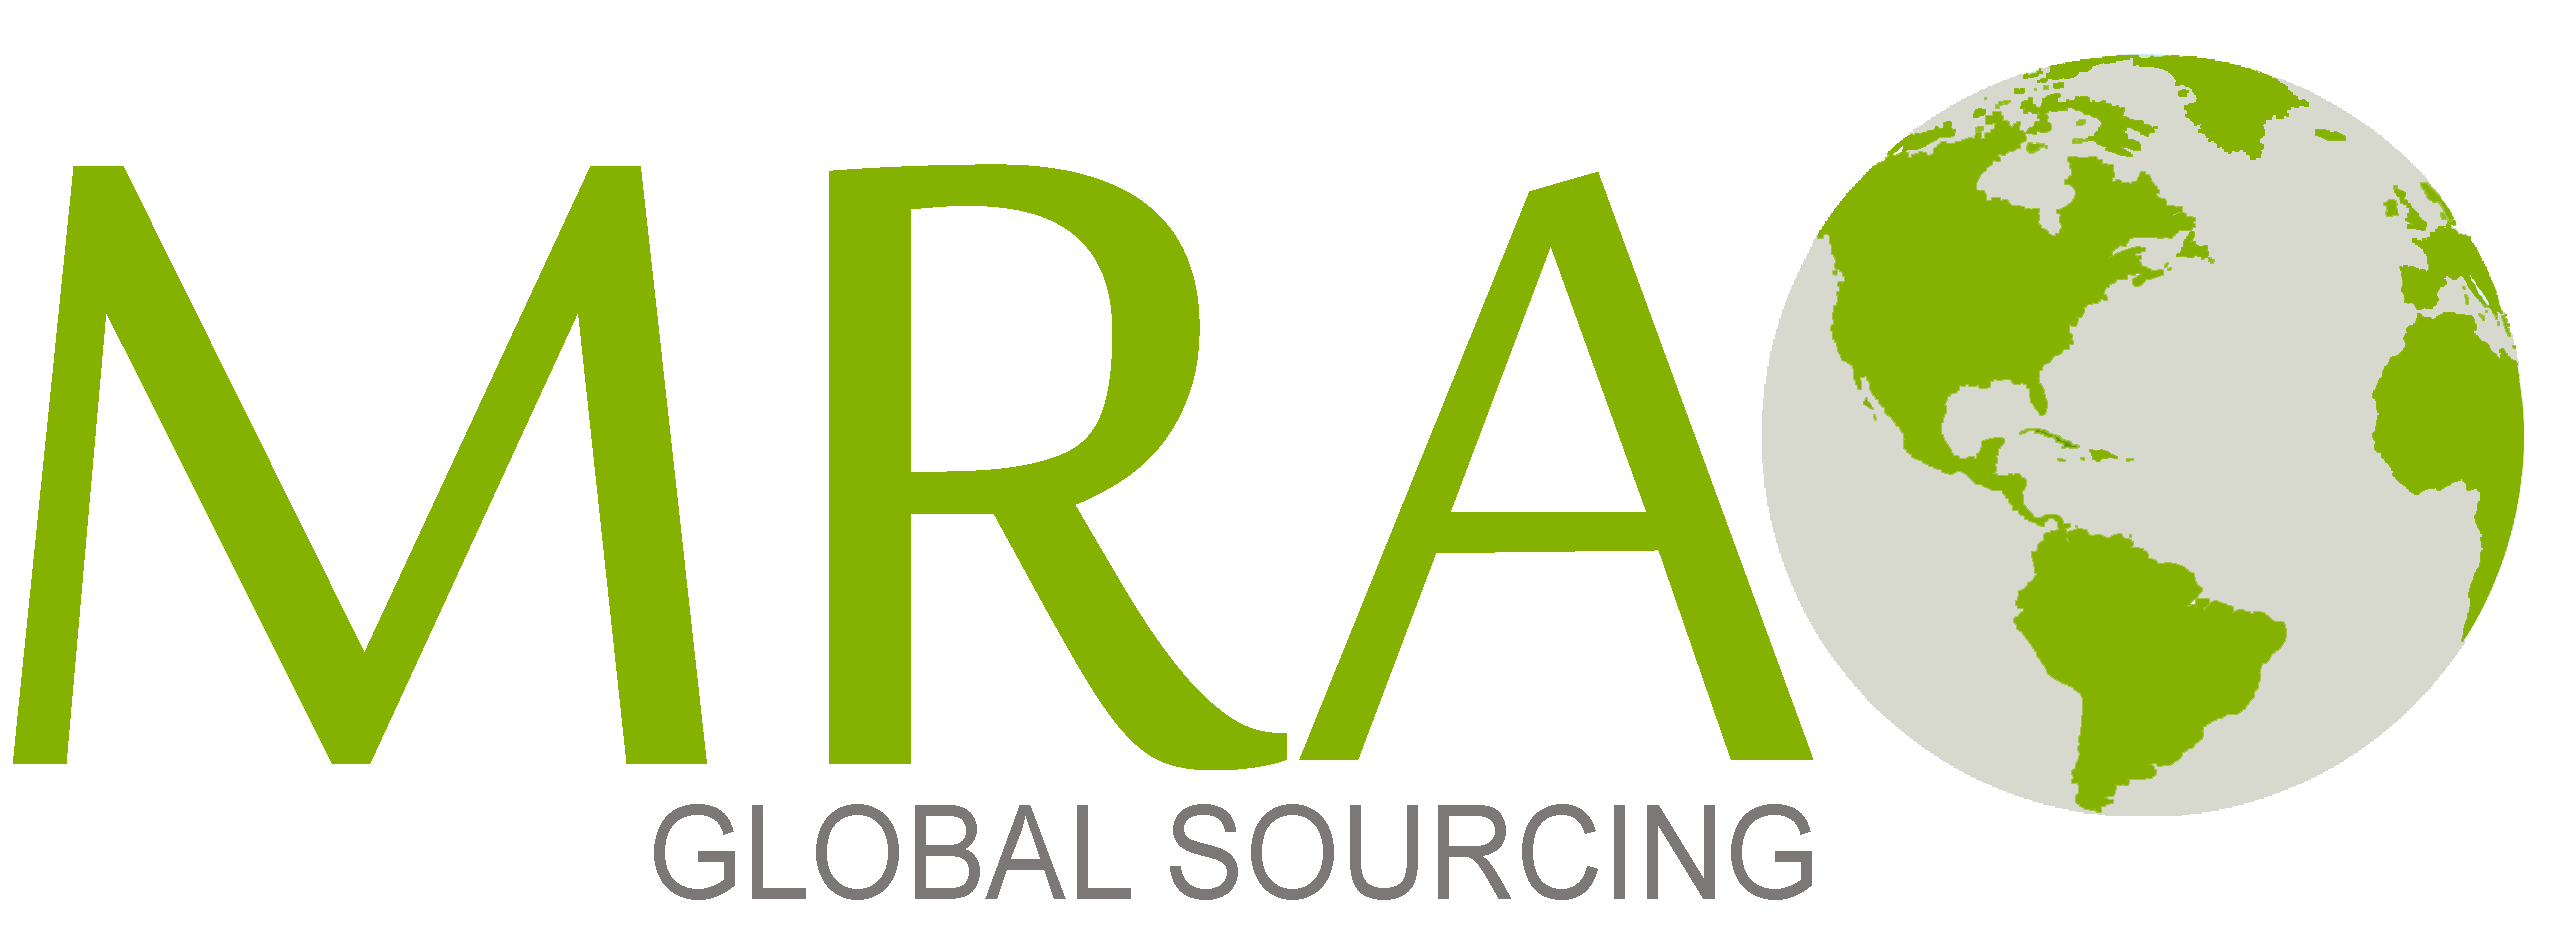 MRA Global Sourcing – Client Logos, Procurement, Sr Level